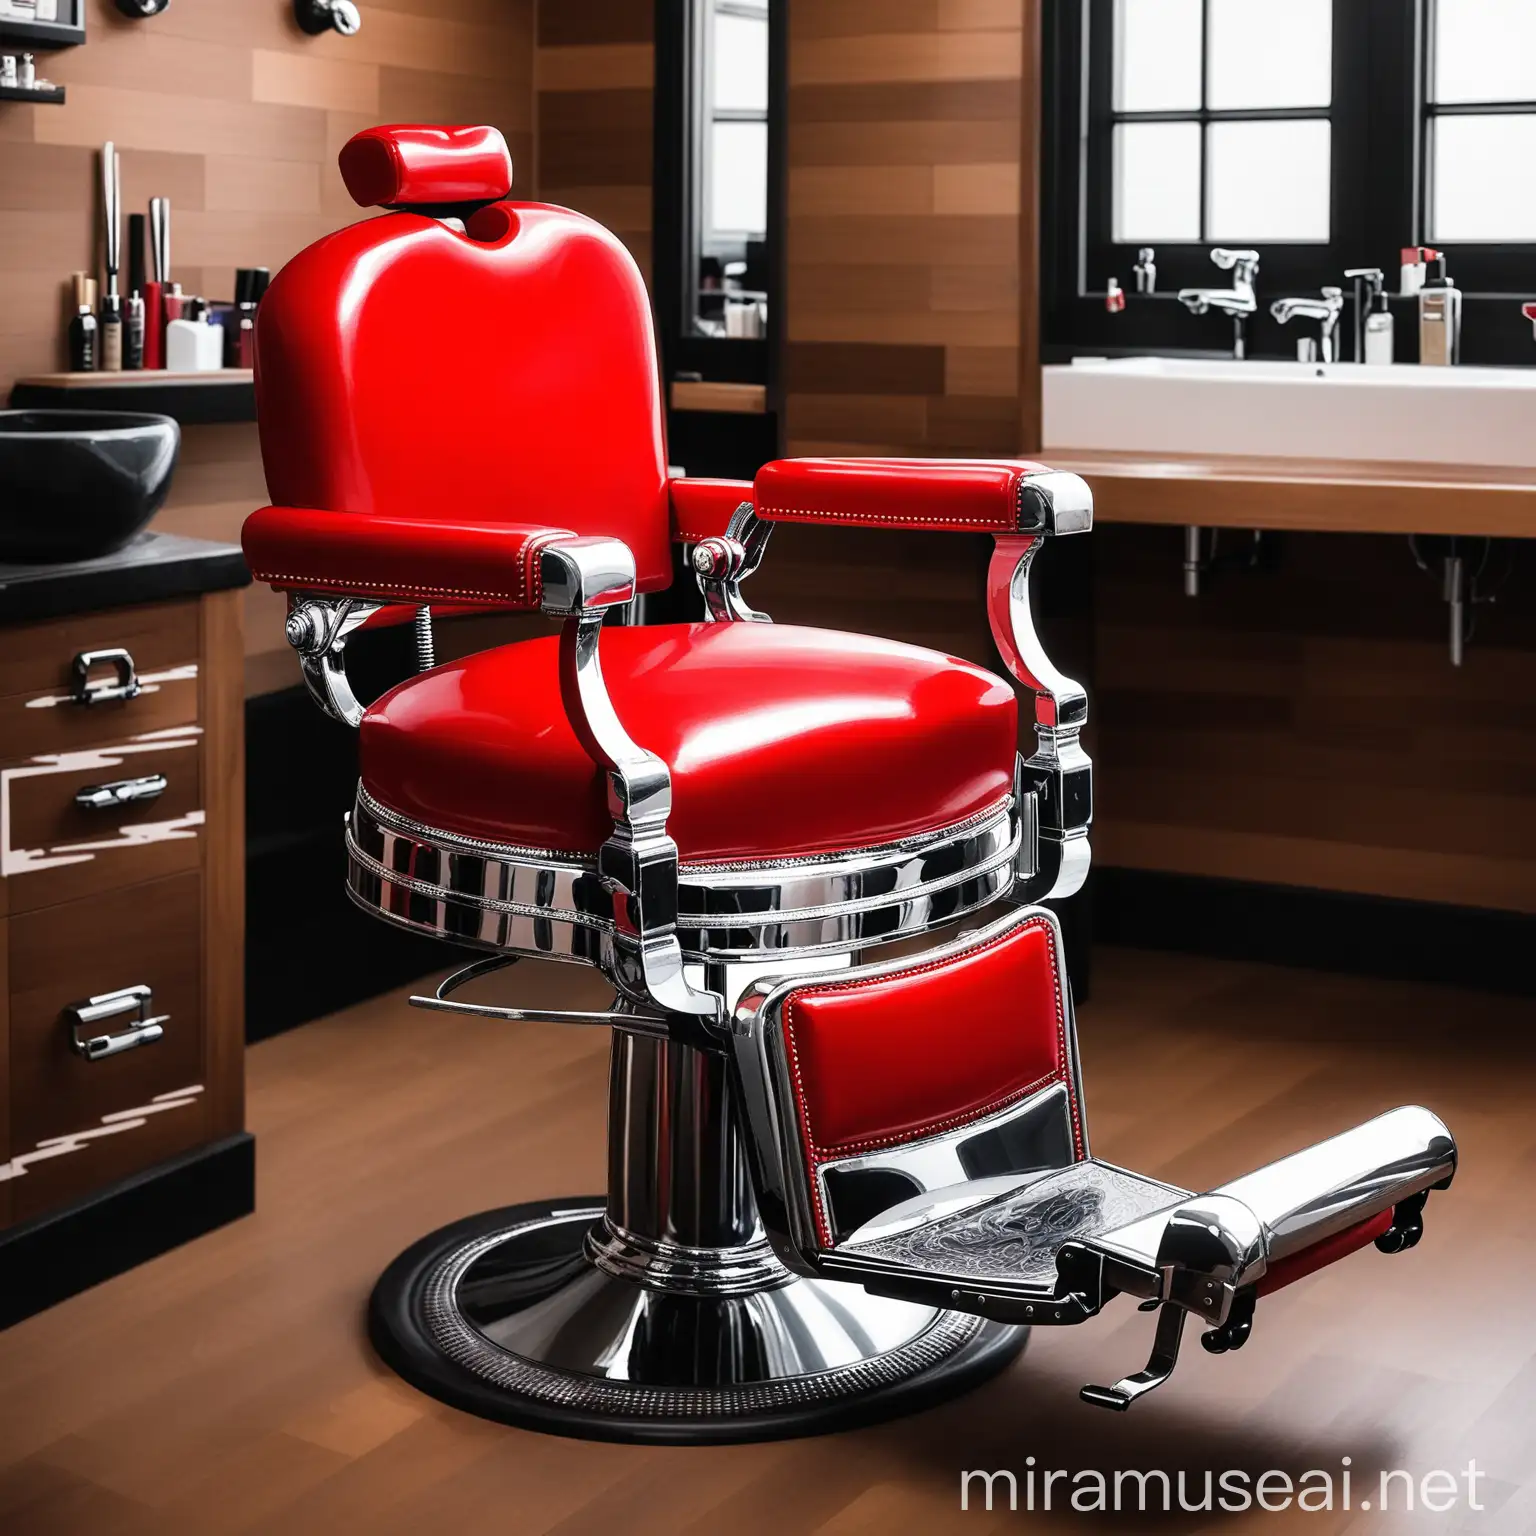 Vintage Red Barber Chair in Retro Barbershop Setting